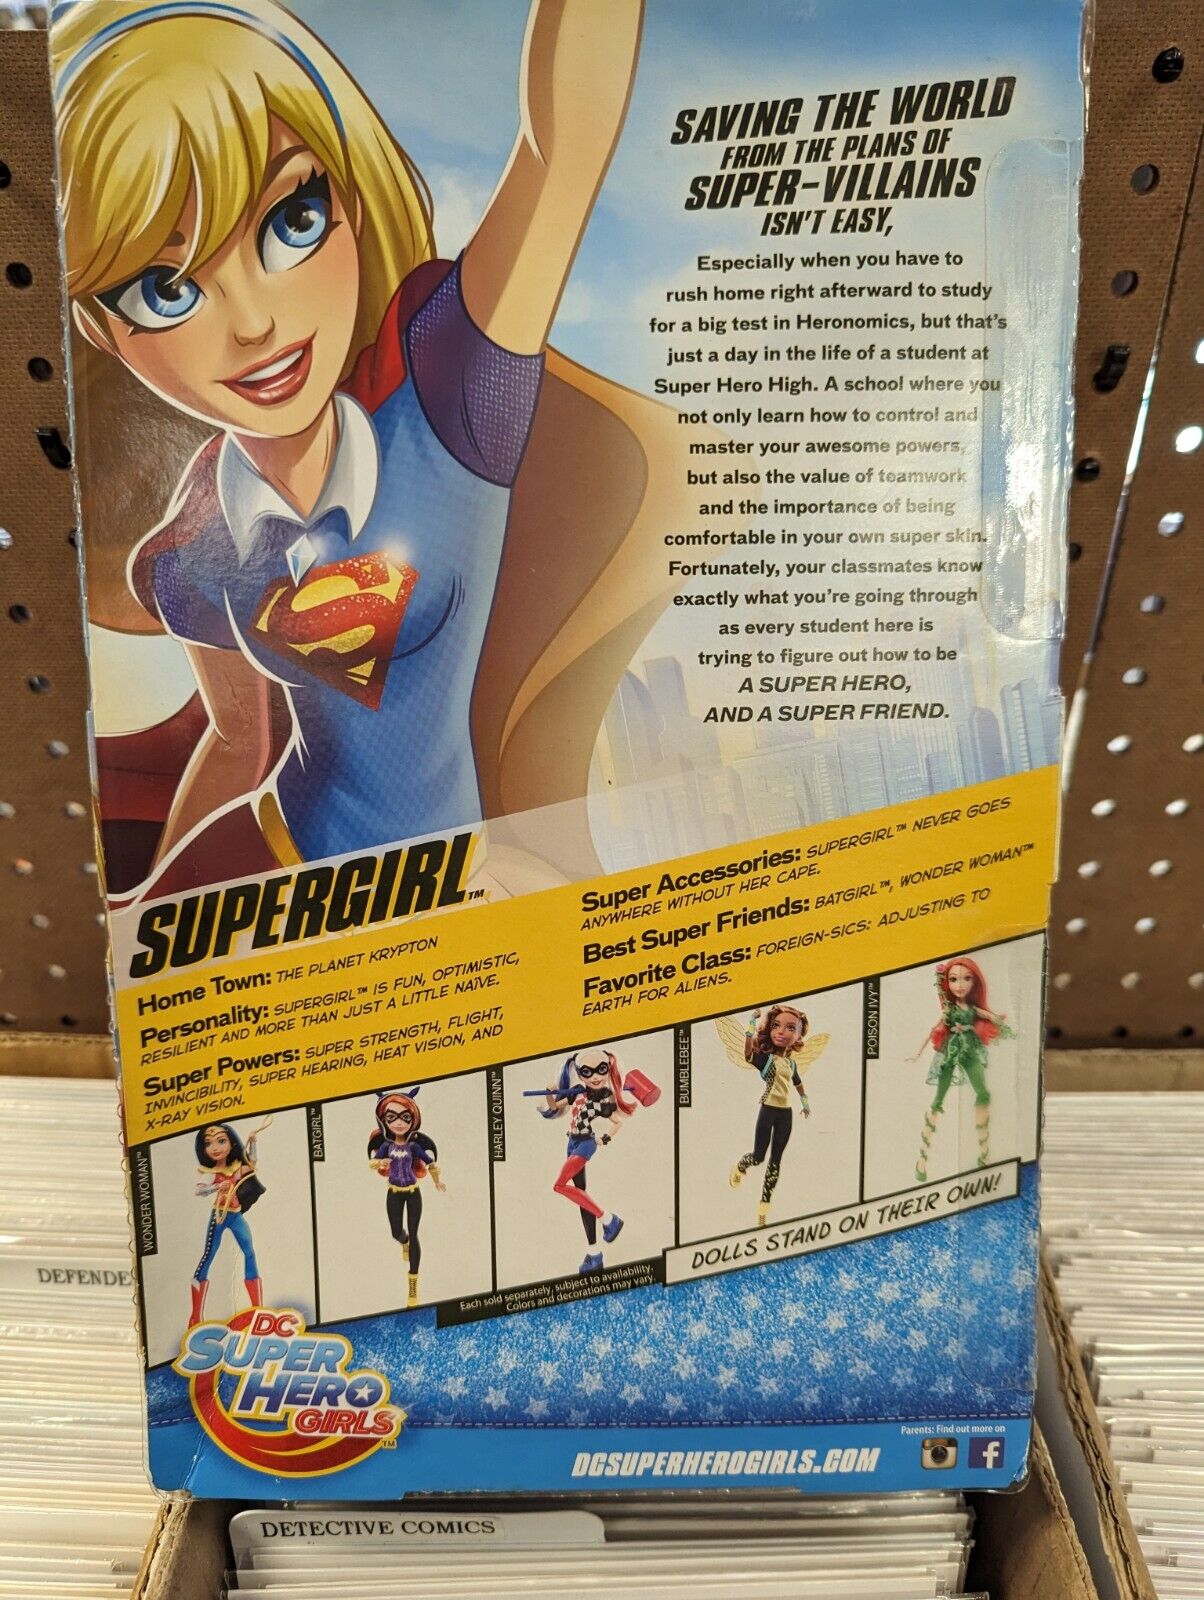 DC Super Hero Girls Supergirl 12" Action Figure Doll Mattel